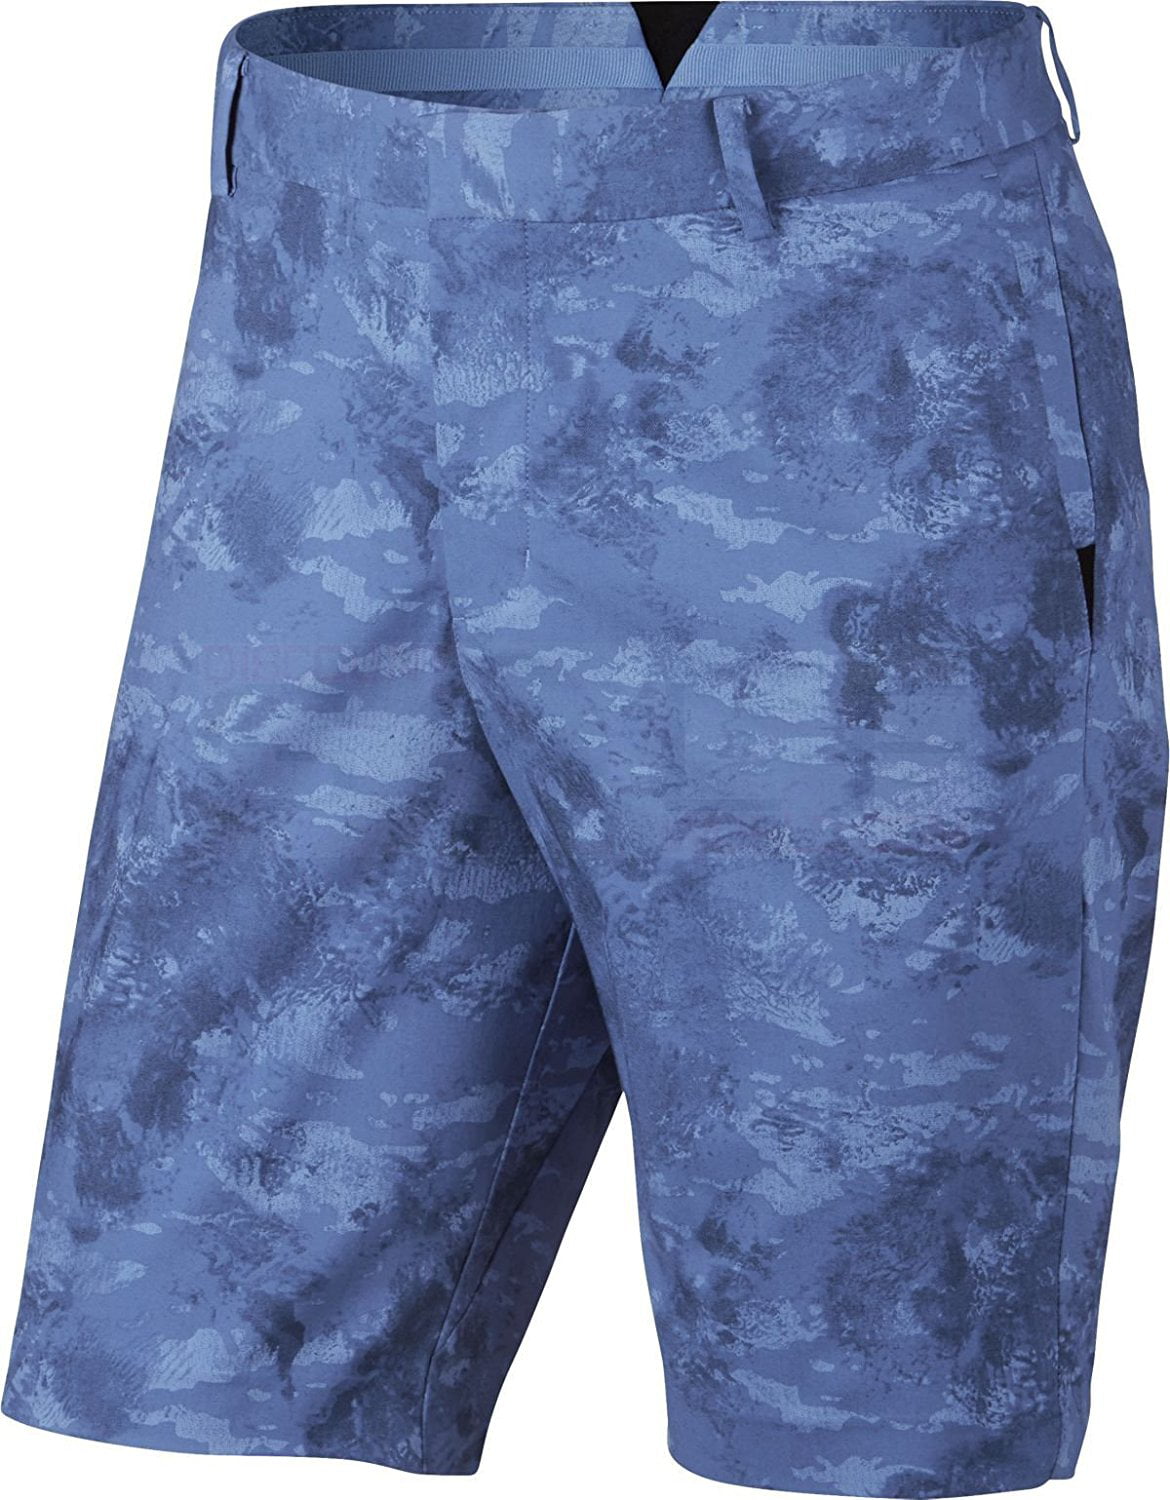 Buy > nike camo golf shorts > in stock